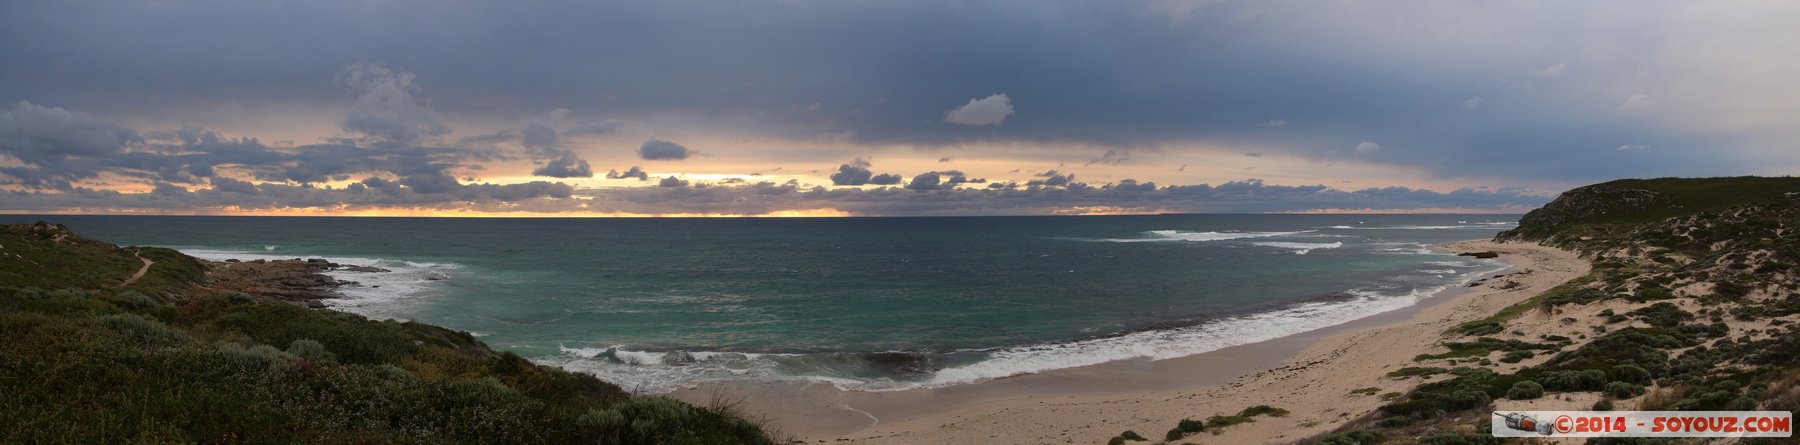 Margaret River - Gnarabup Beach - Sunset - Panorama
Stitched Panorama
Mots-clés: AUS Australie geo:lat=-34.00258426 geo:lon=114.99743561 geotagged Gnarabup Western Australia Margaret River Gnarabup Beach sunset Lumiere panorama